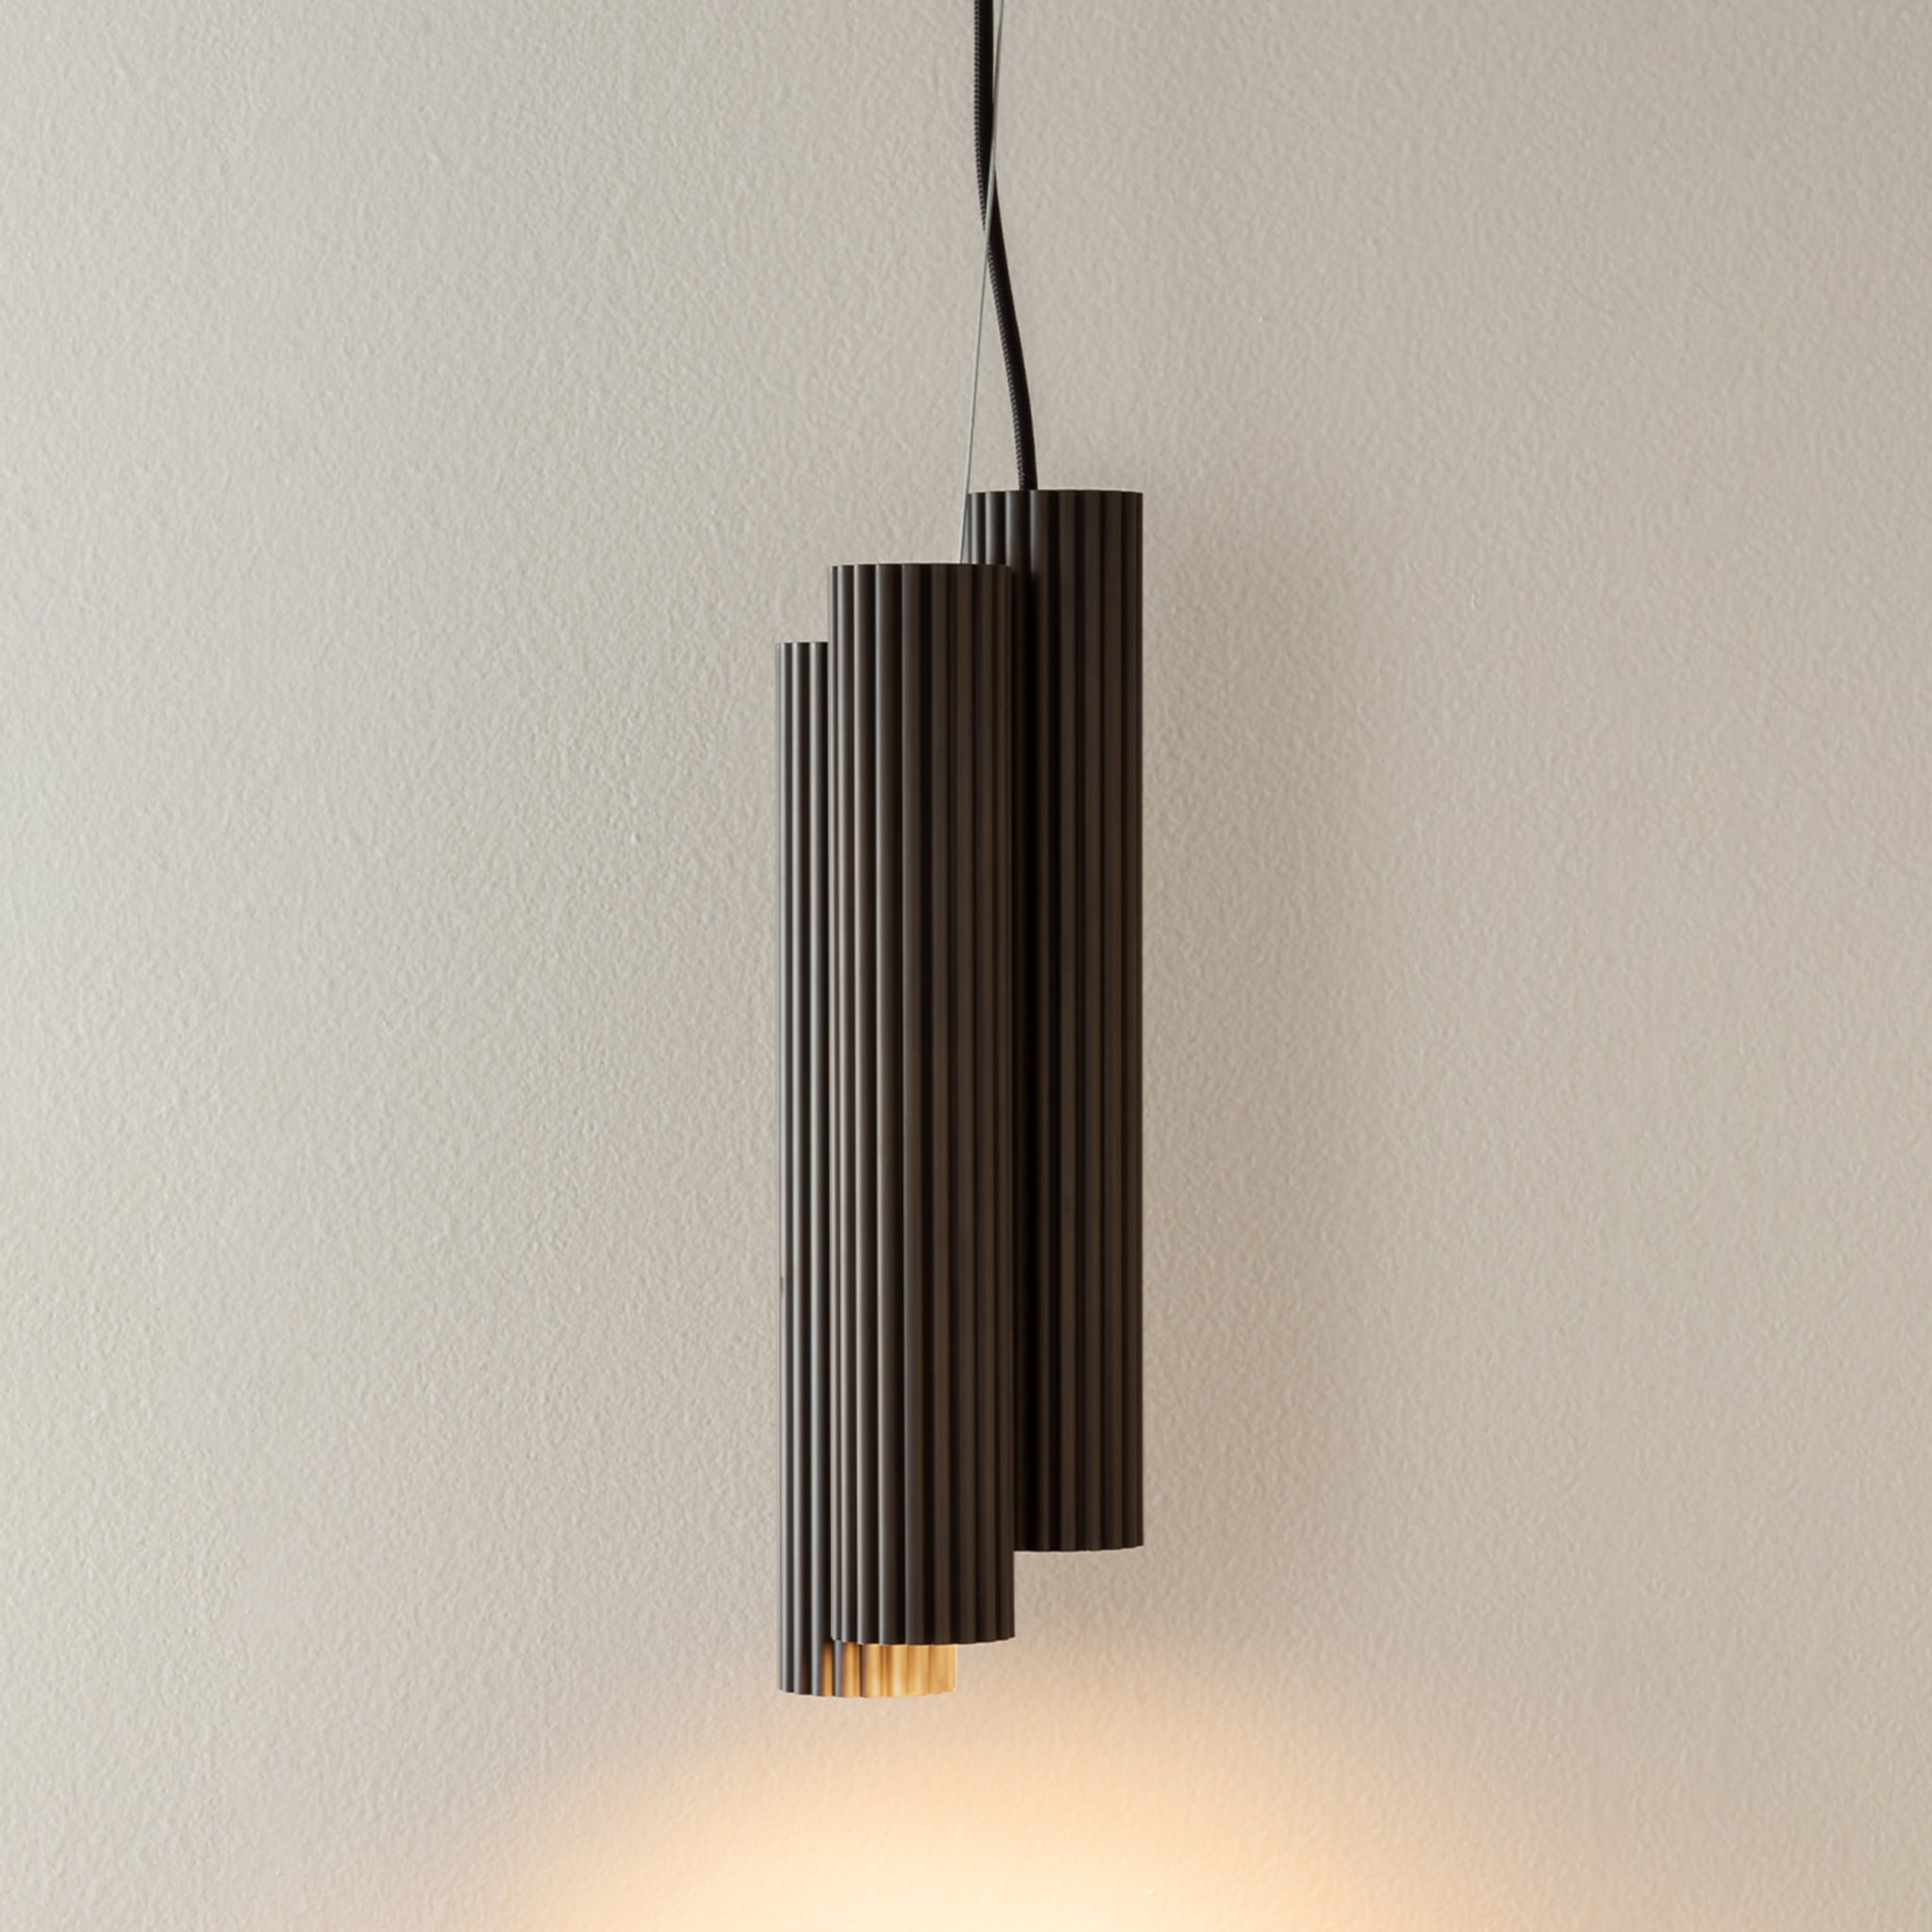 Lampe à suspension Lustrin par Isacco Brioschi - Vue alternative 2